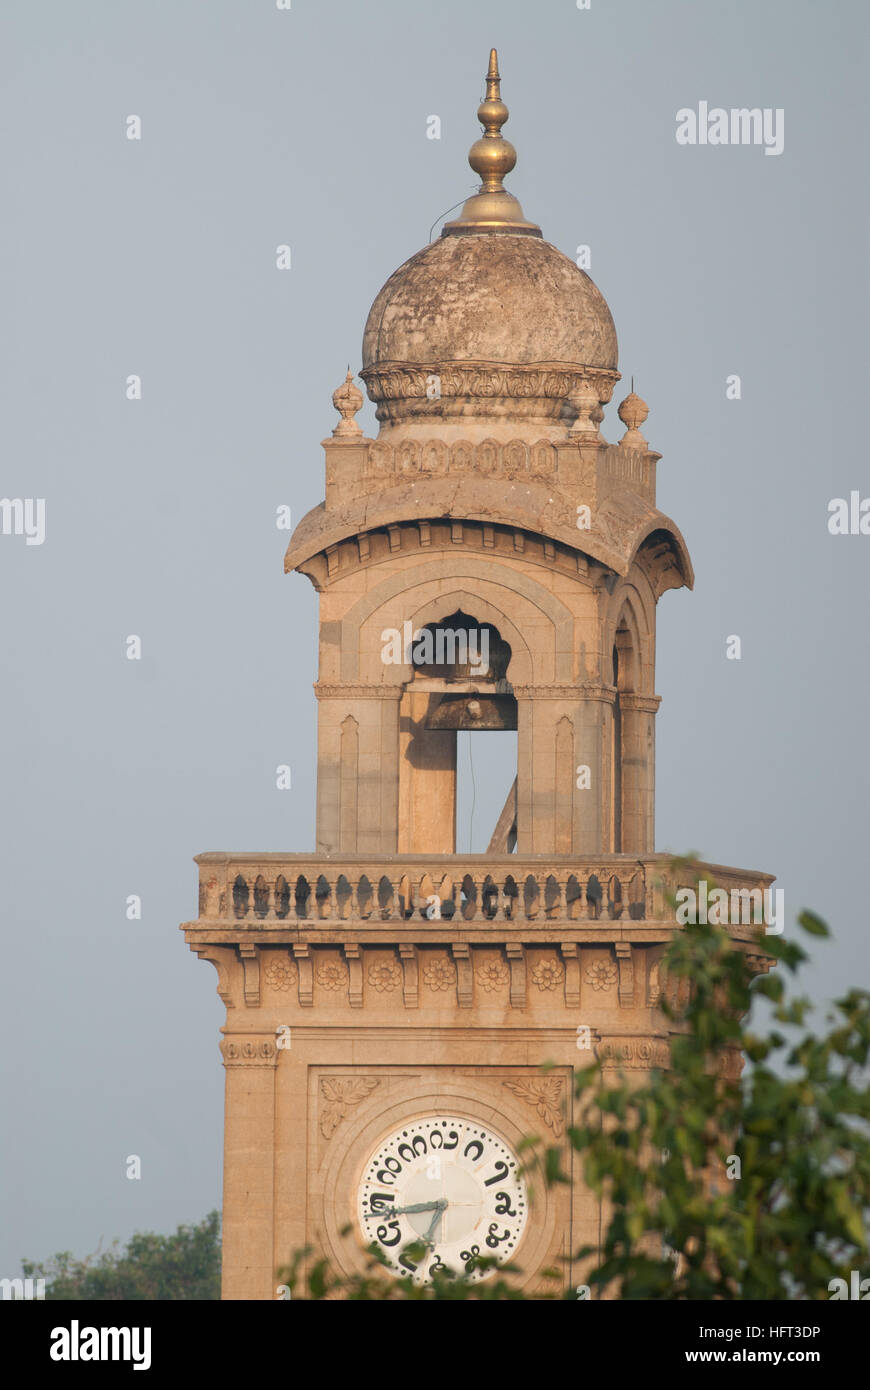 La tour de l'horloge dans Mysuru Kanadda Mysore avec chiffres arabes Banque D'Images